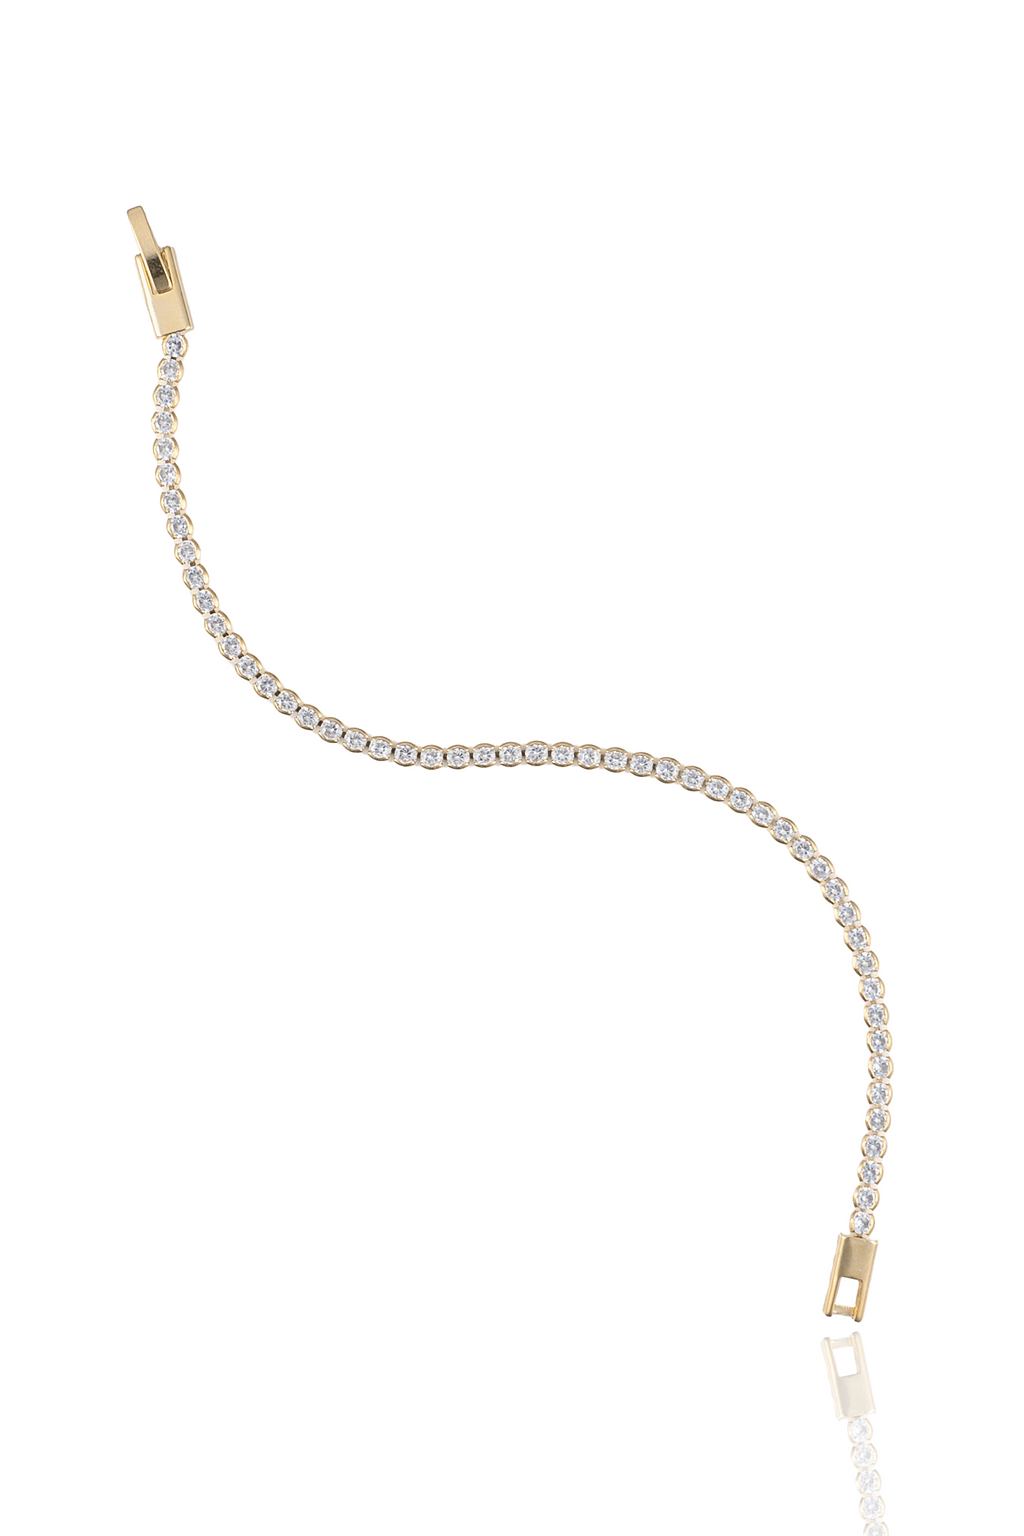 3mm Diamond Tennis Bracelet Necklace (F236A)(I46B)